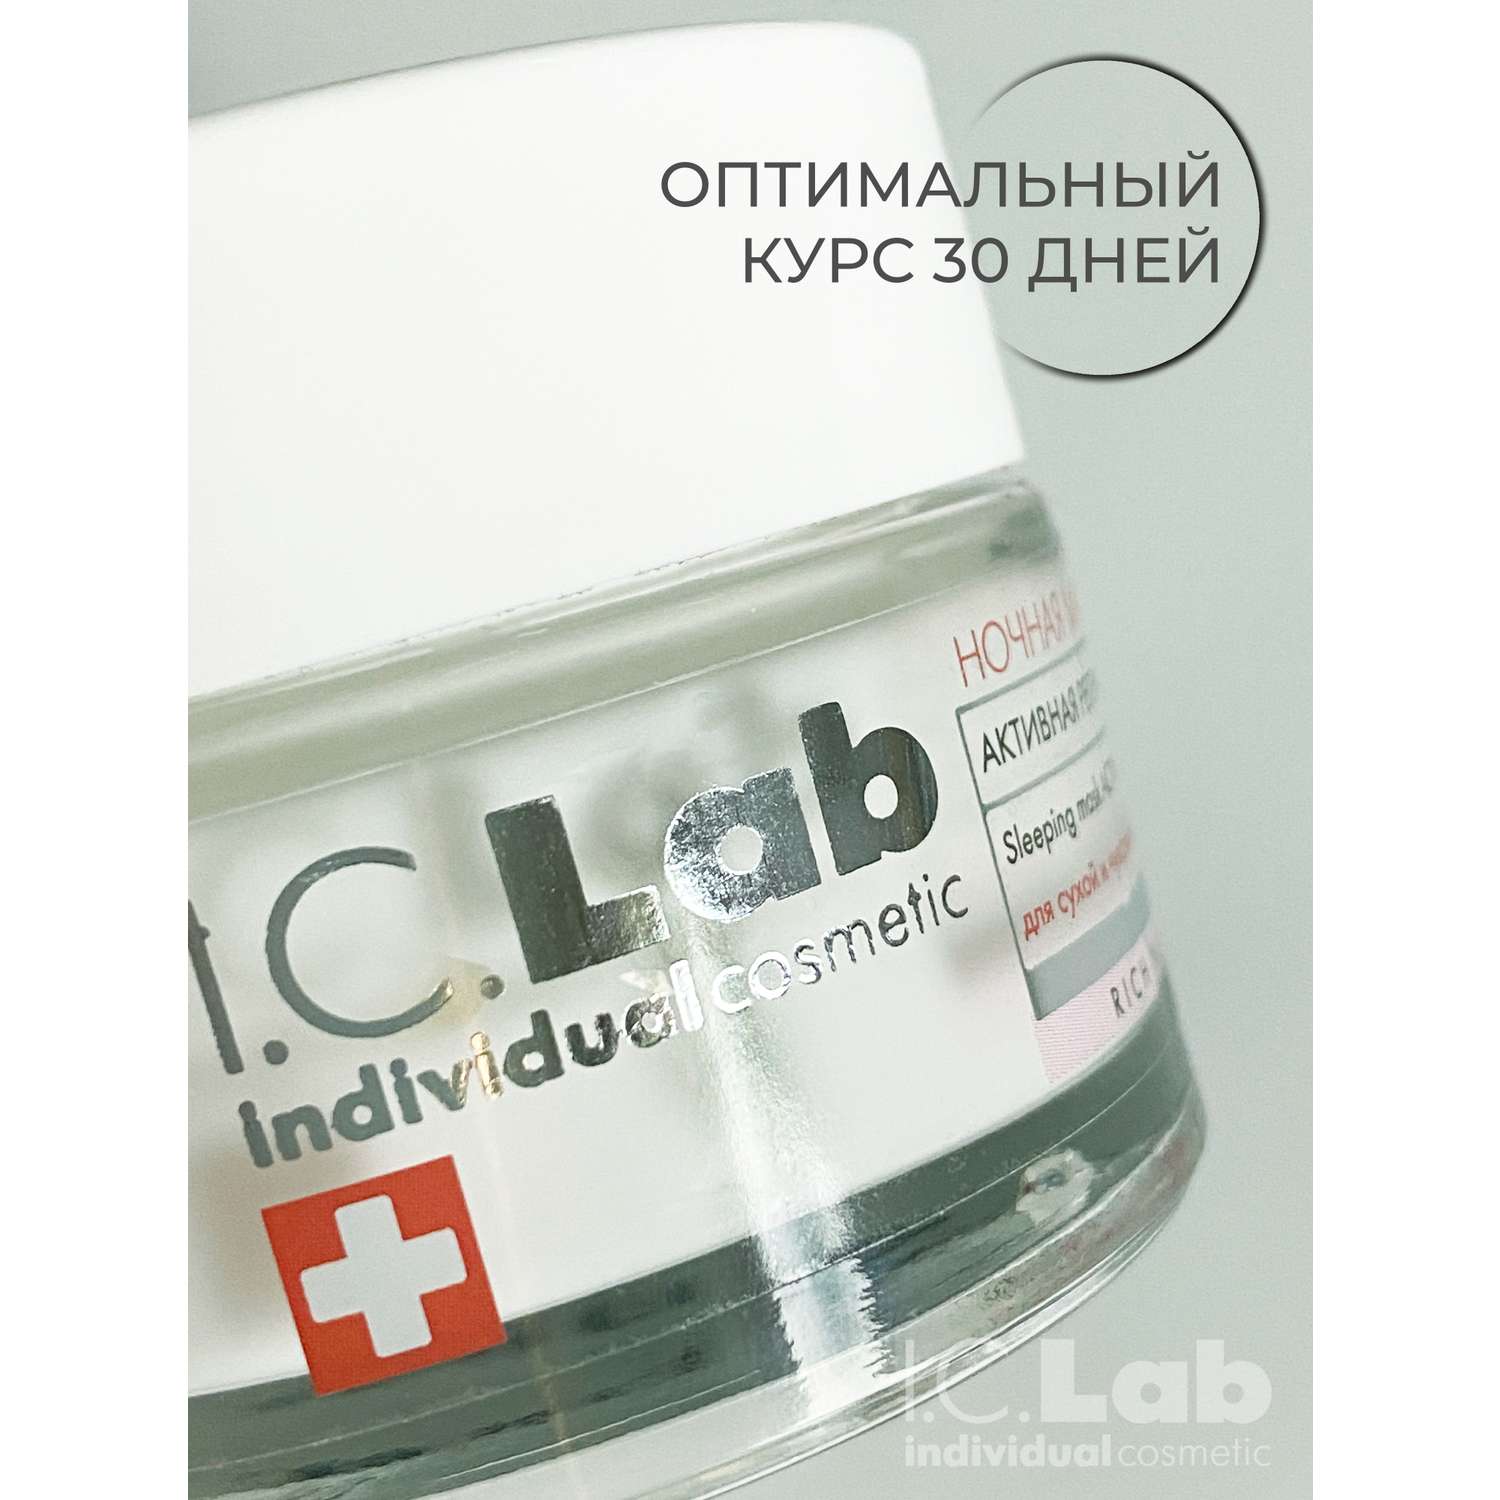 Маска для лица I.C.Lab Individual cosmetic Ночная активная регенерация 50 мл - фото 10